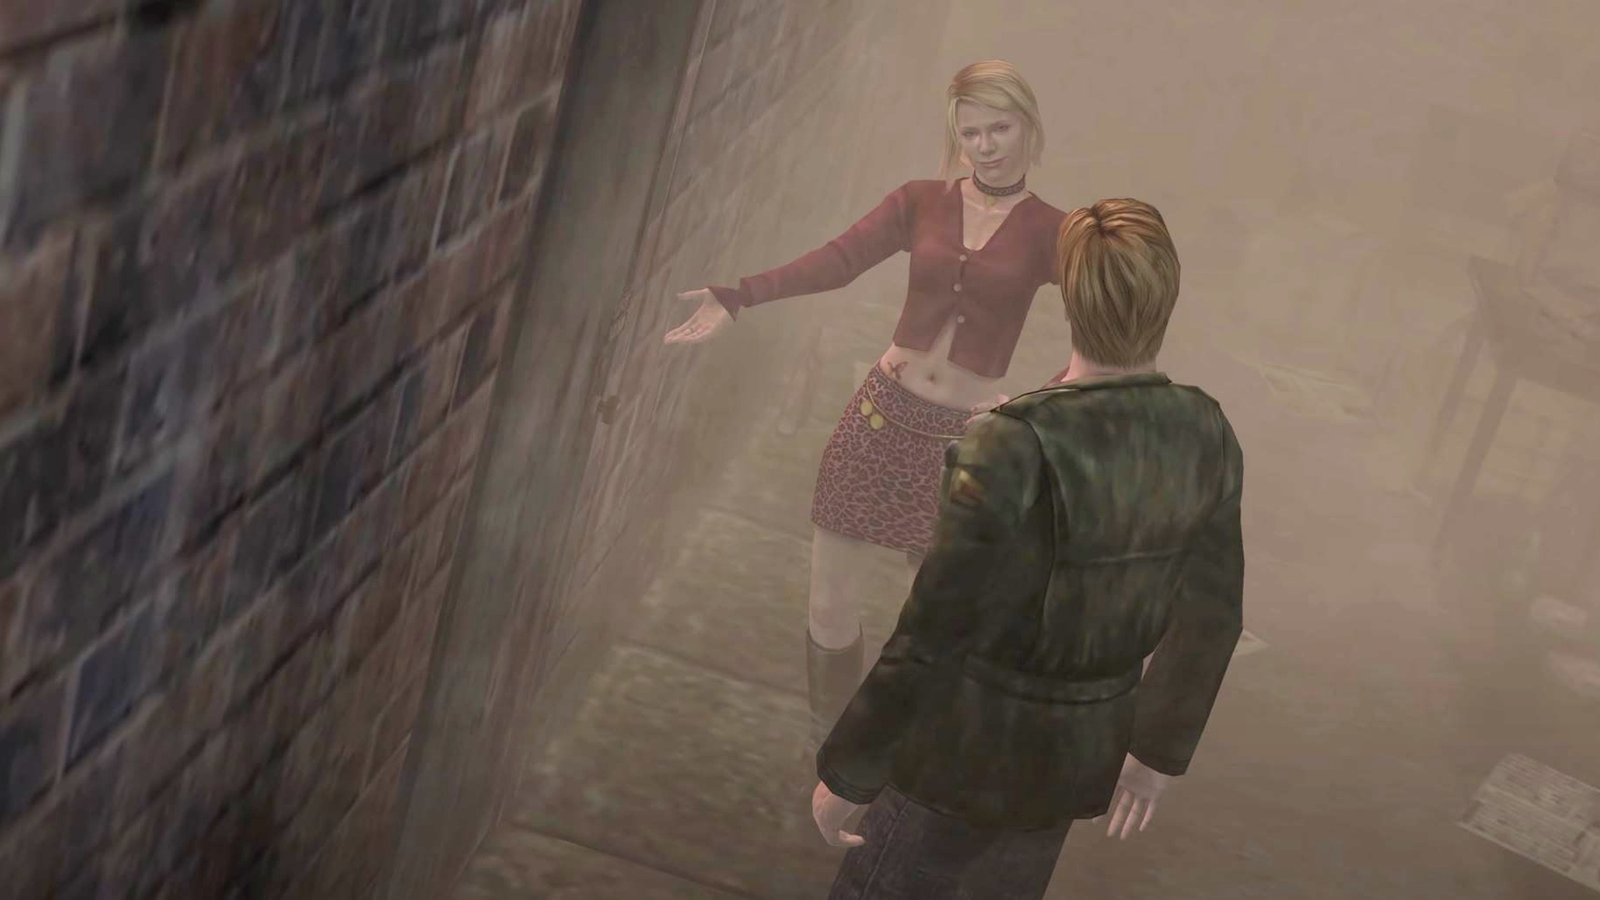  Silent Hill Hintergrundbild 1600x900. 